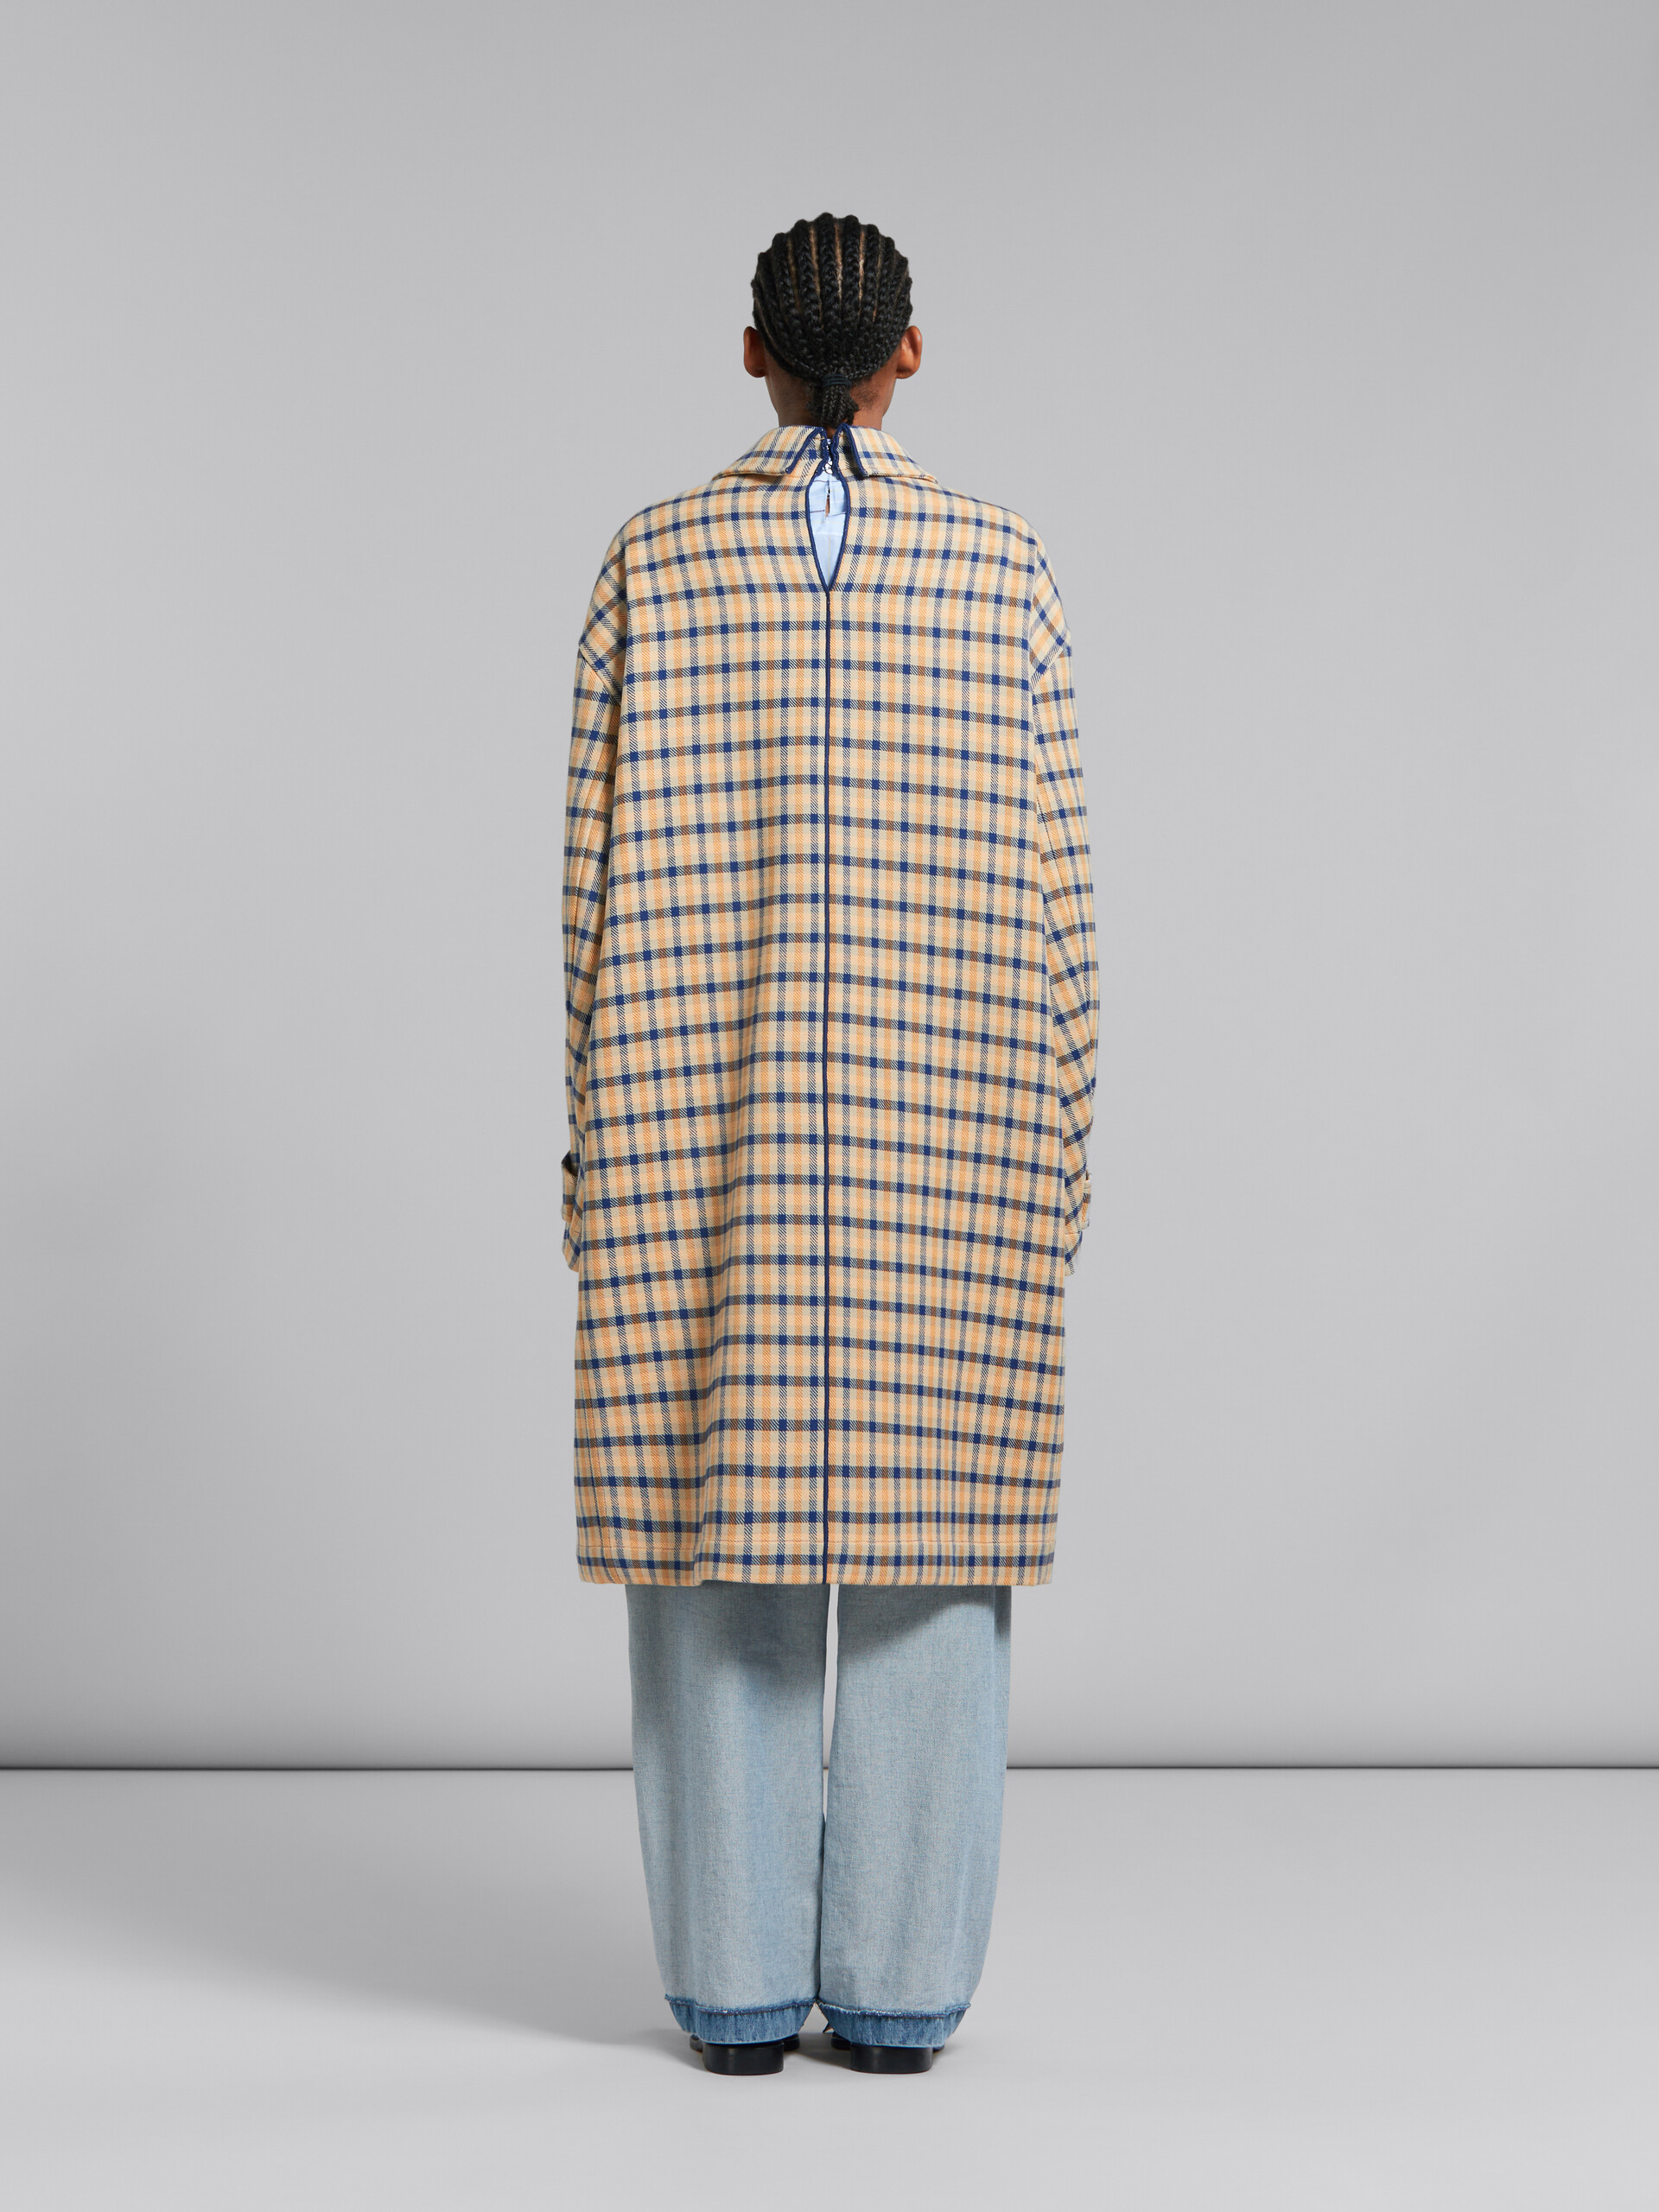 Abrigo reversible de lana azul y amarilla a cuadros - Abrigos - Image 3